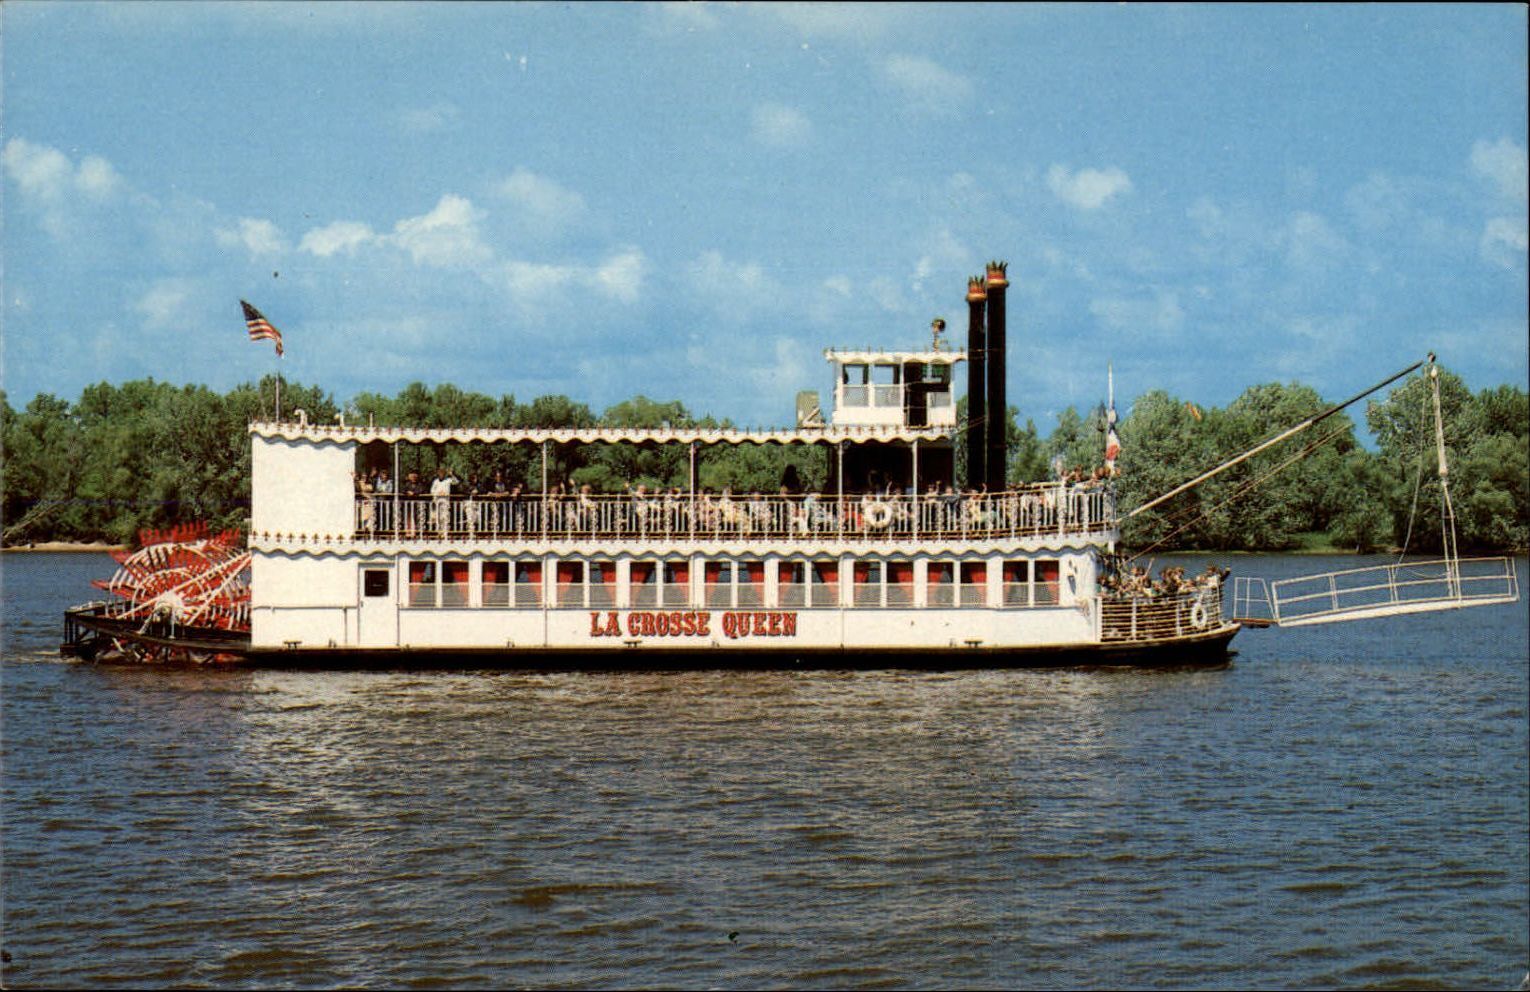 Wisconsin La Crosse Queen paddle wheel boat ~ dated 1983 postcard